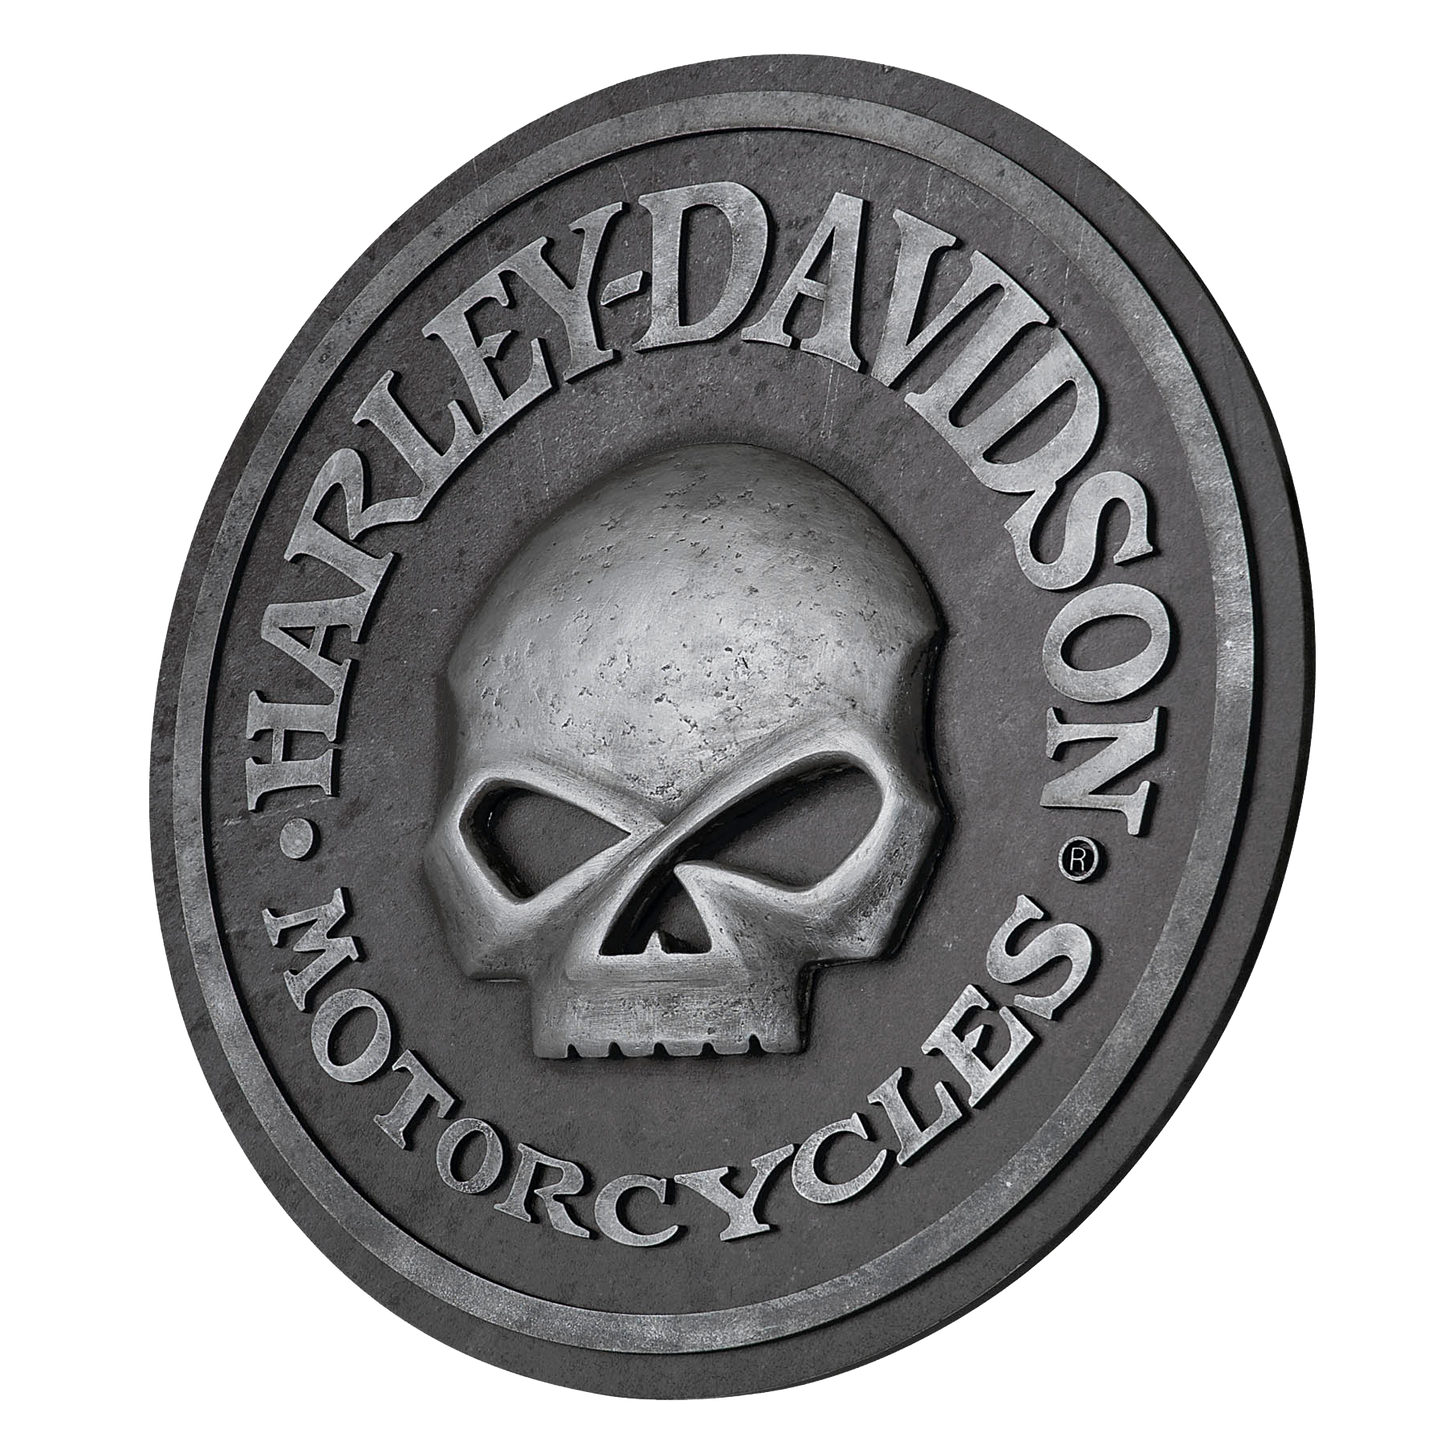 Harley Davidson Skull Pub Sign